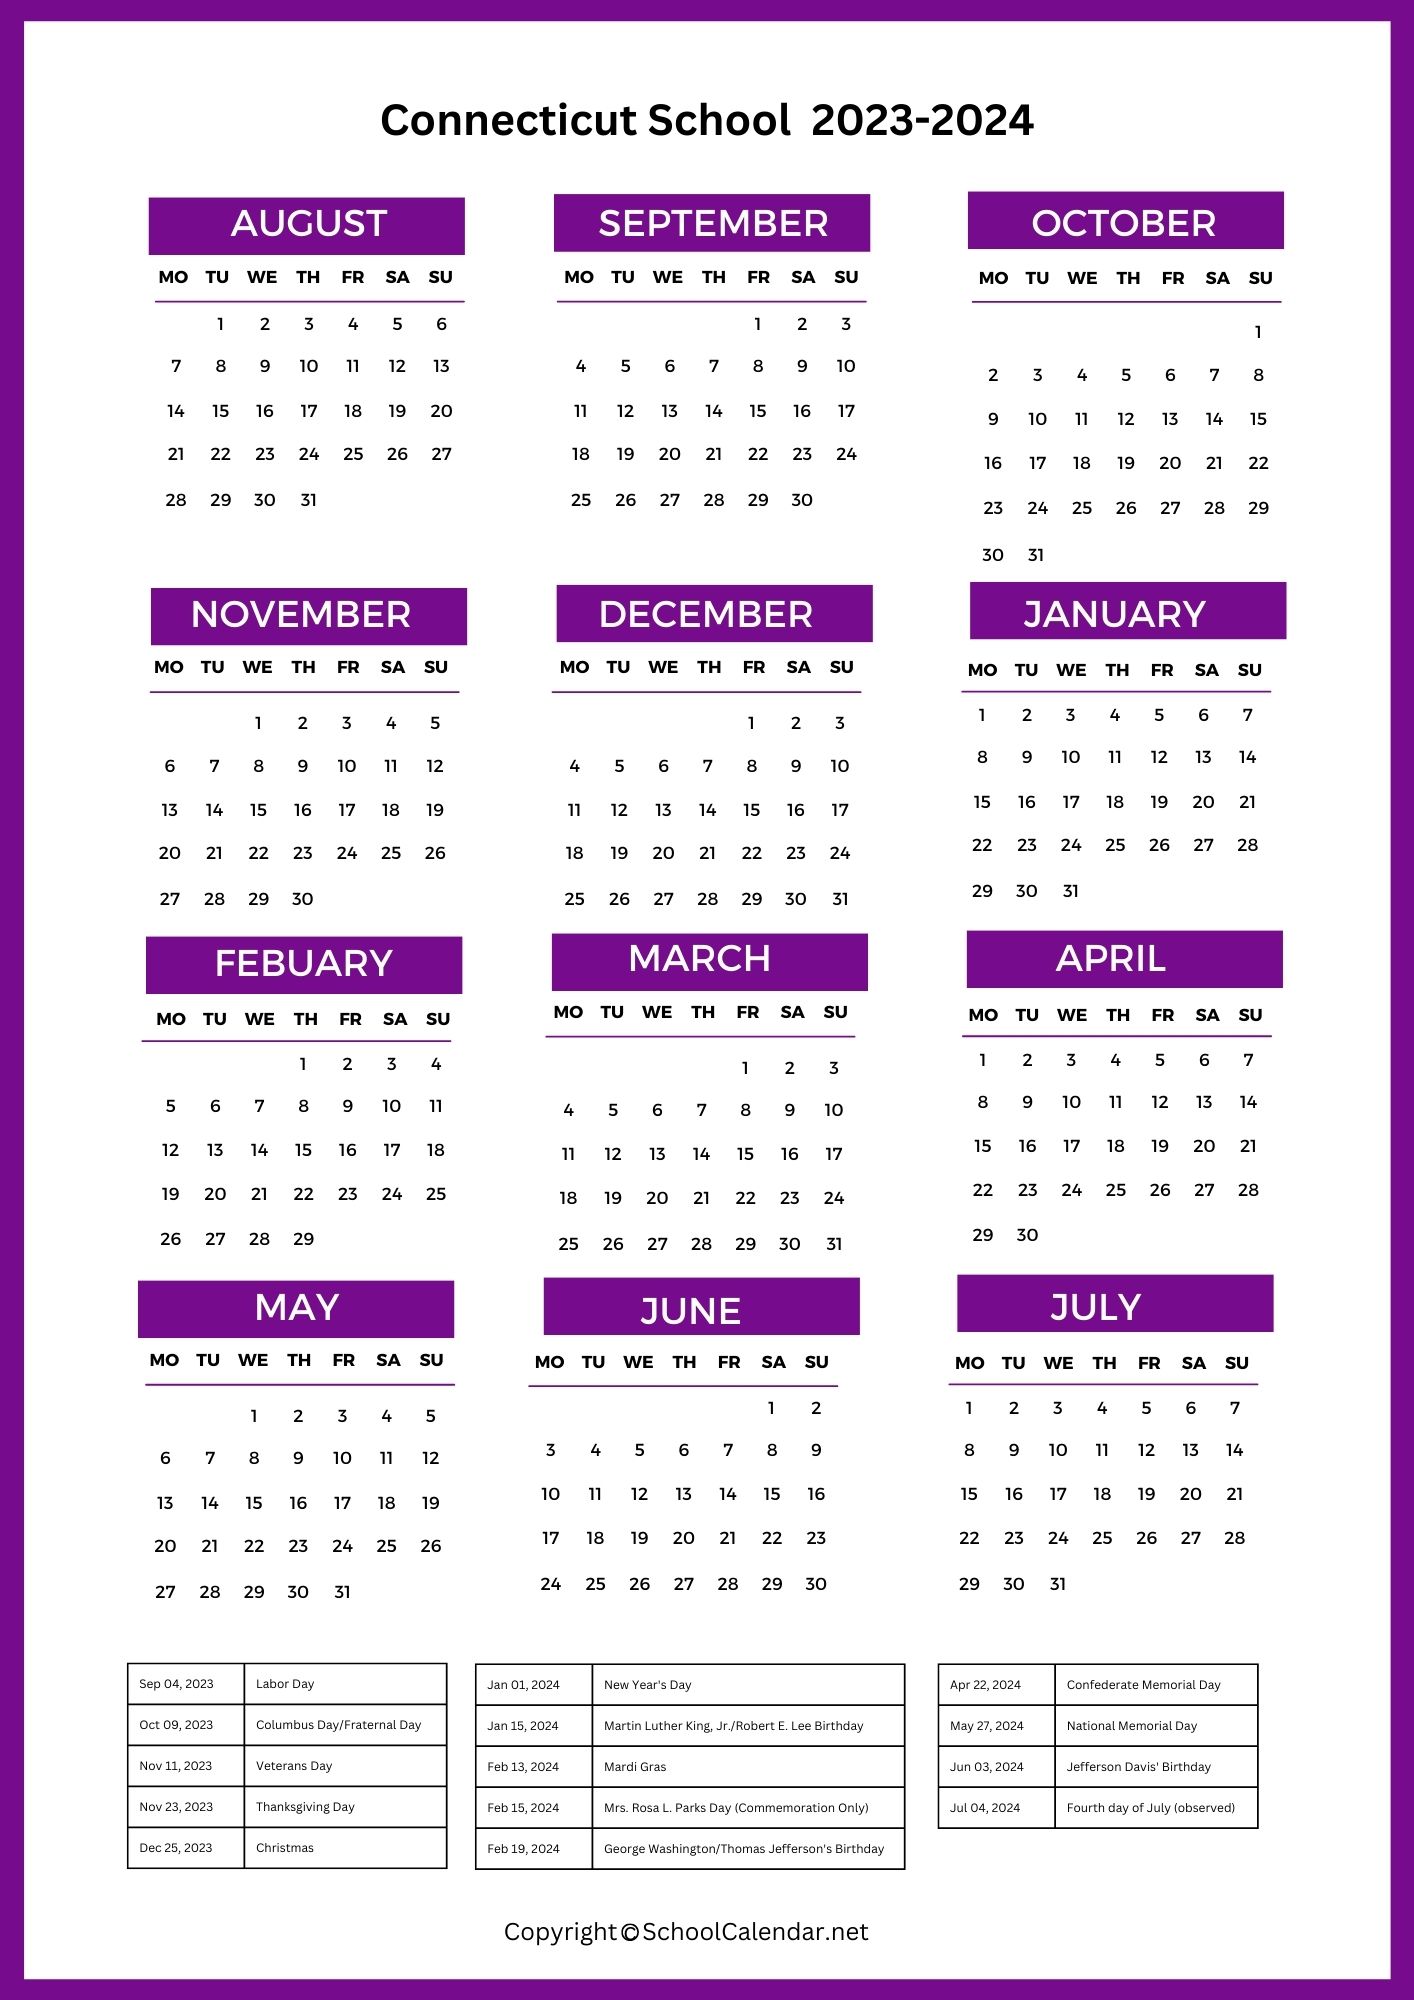 Connecticut School Holiday Schedule 2023